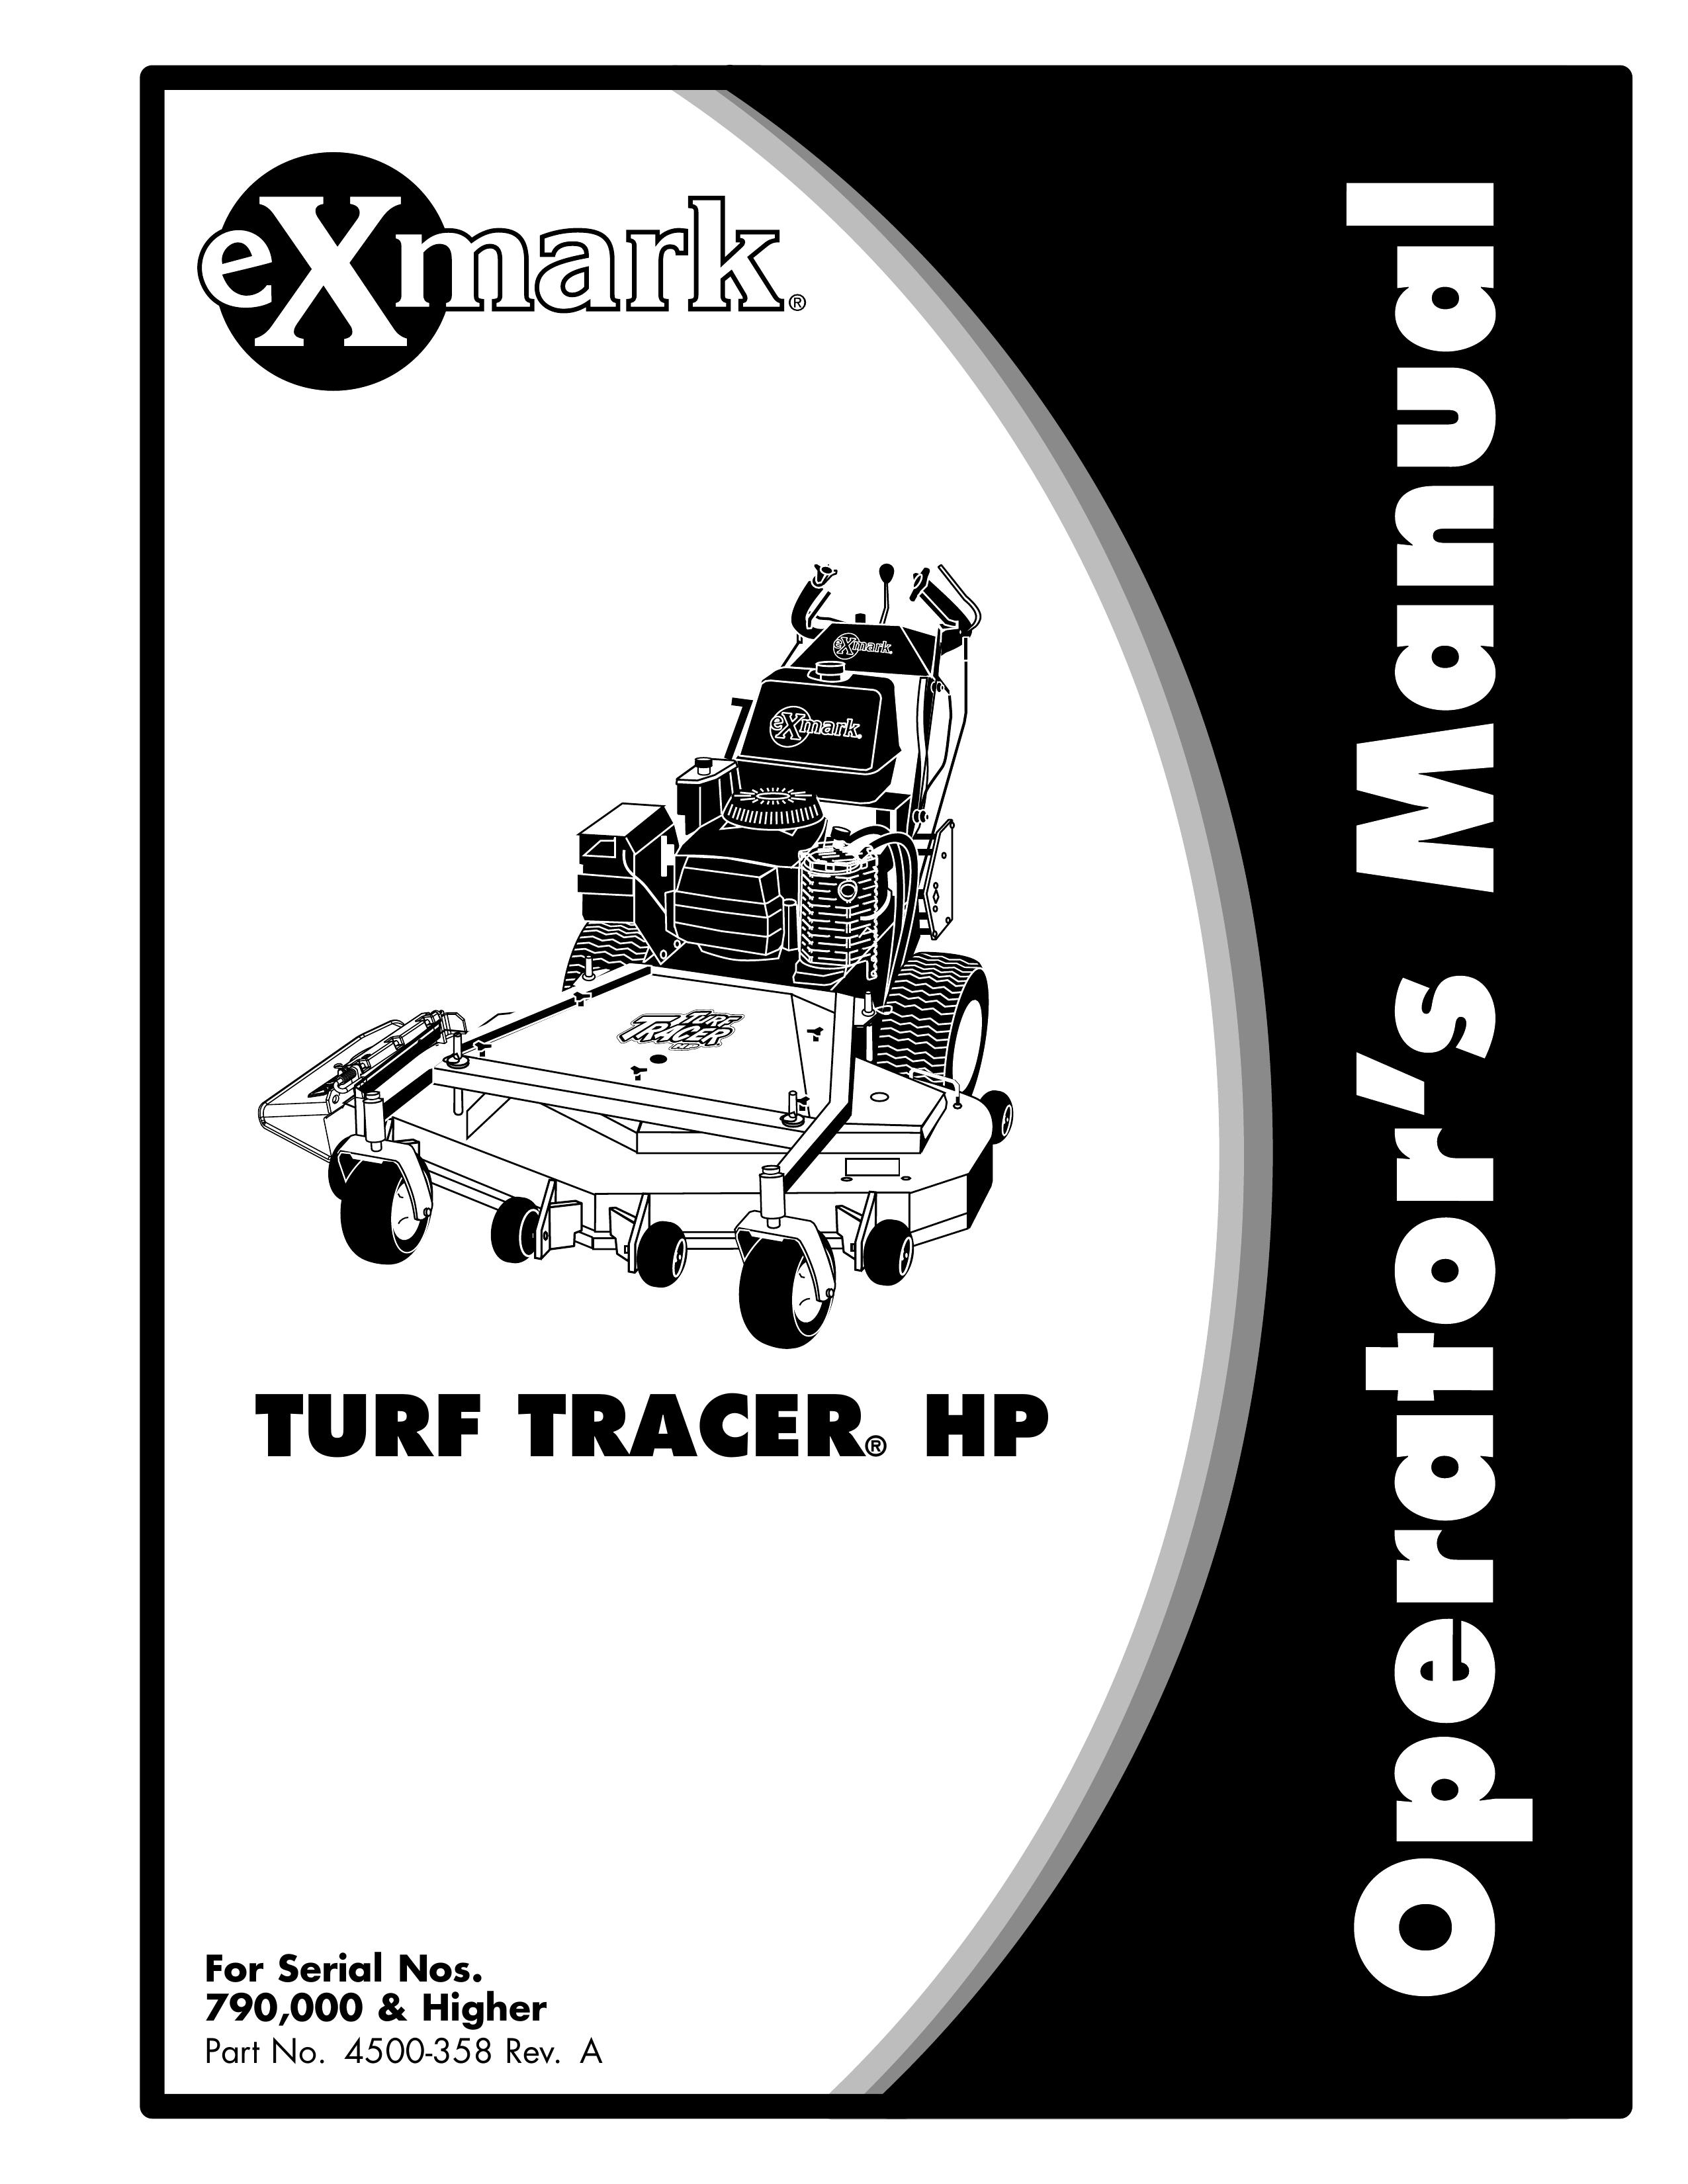 Exmark 4500-358 Lawn Mower User Manual